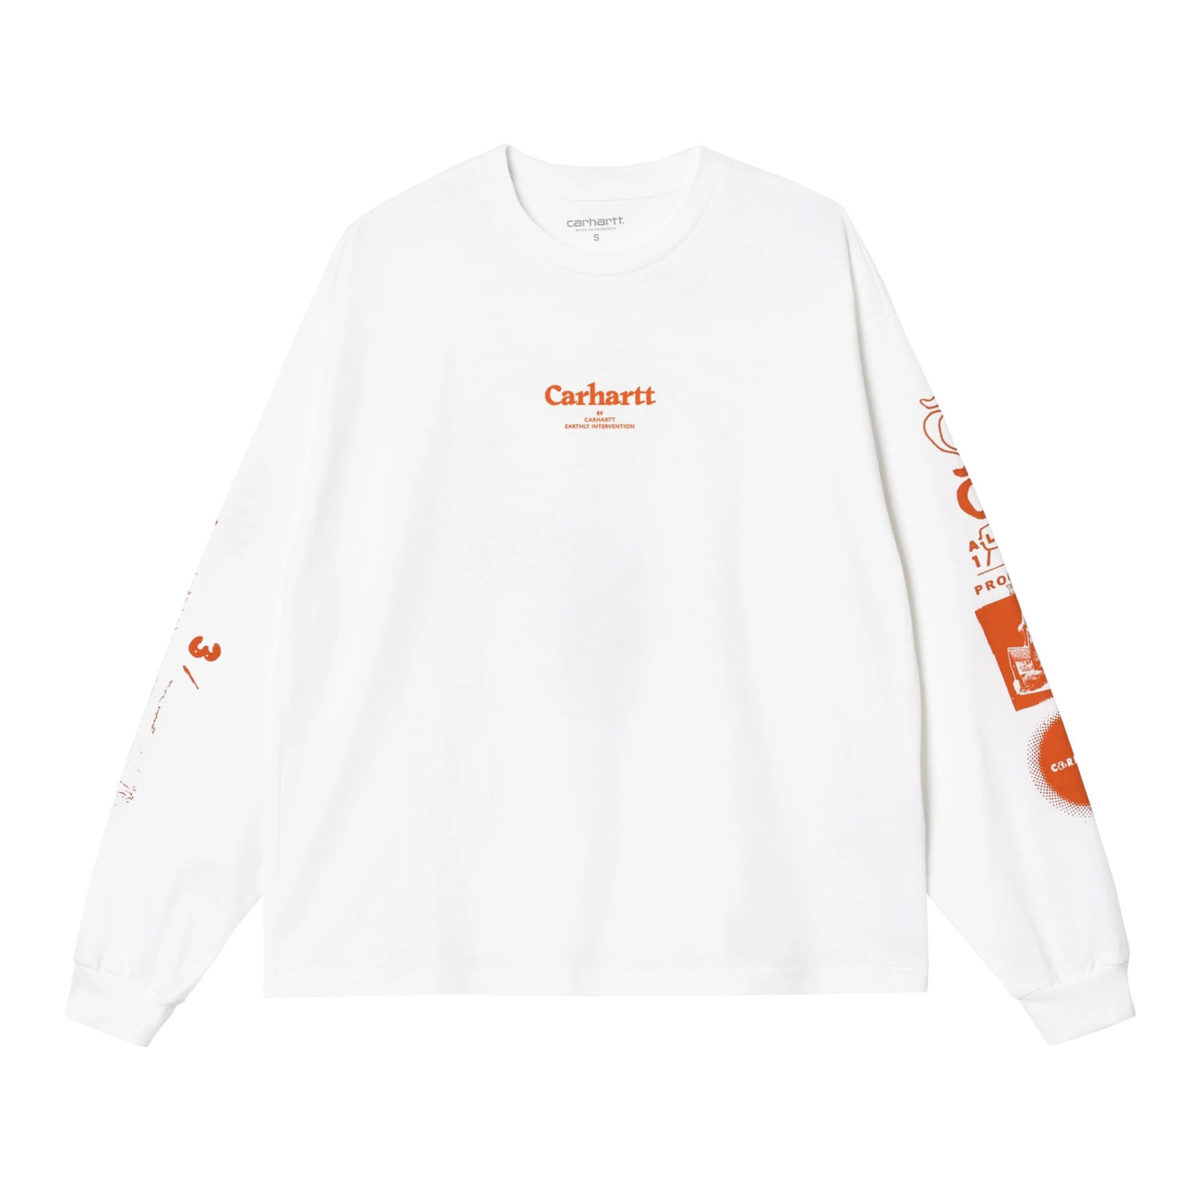 Carhartt Women's Life Long Sleeve Tee - White/Dark Orange